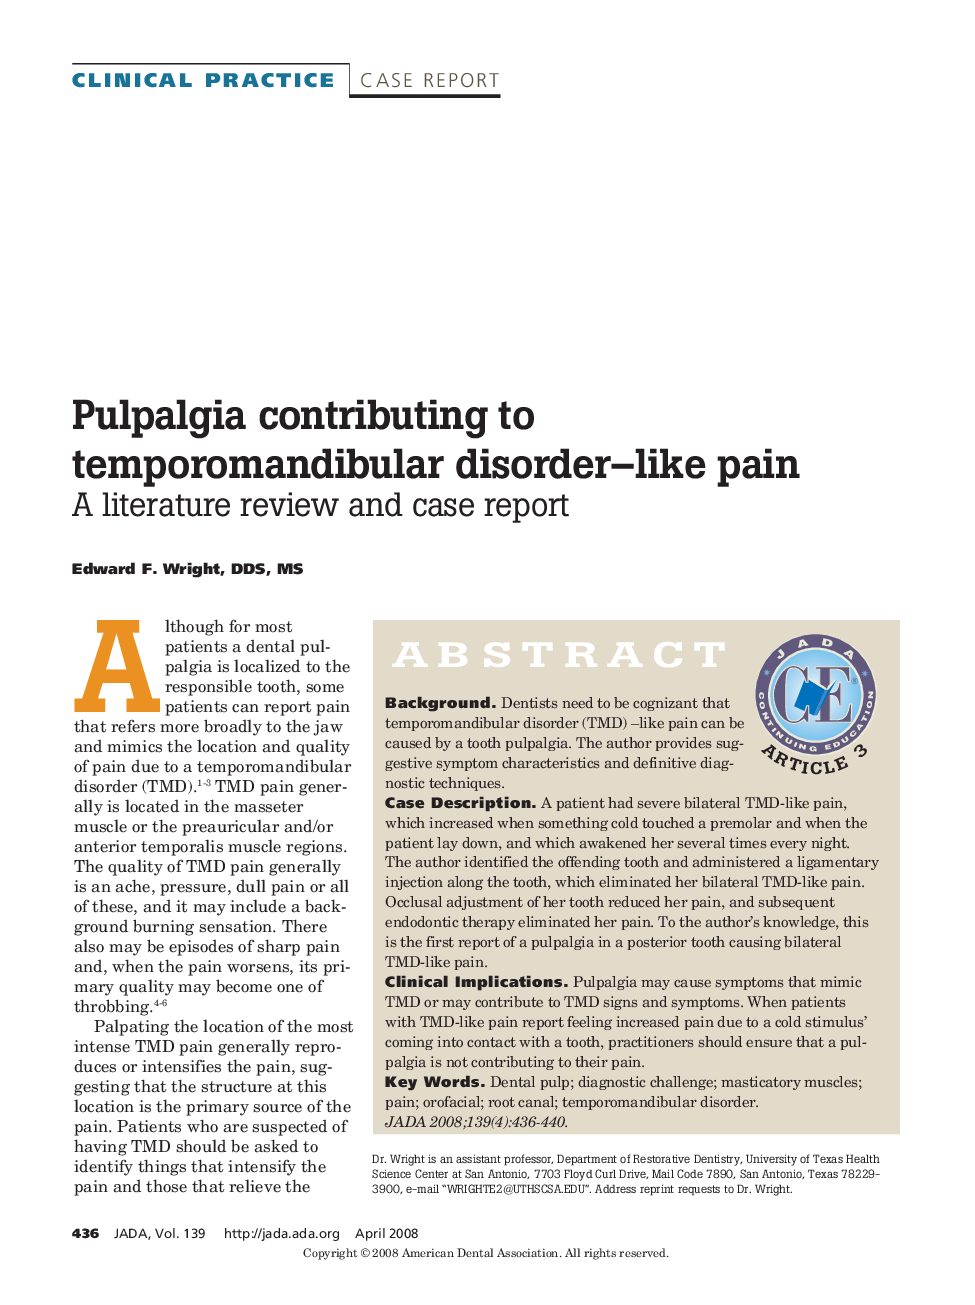 Pulpalgia Contributing to Temporomandibular Disorder–like Pain : A Literature Review and Case Report